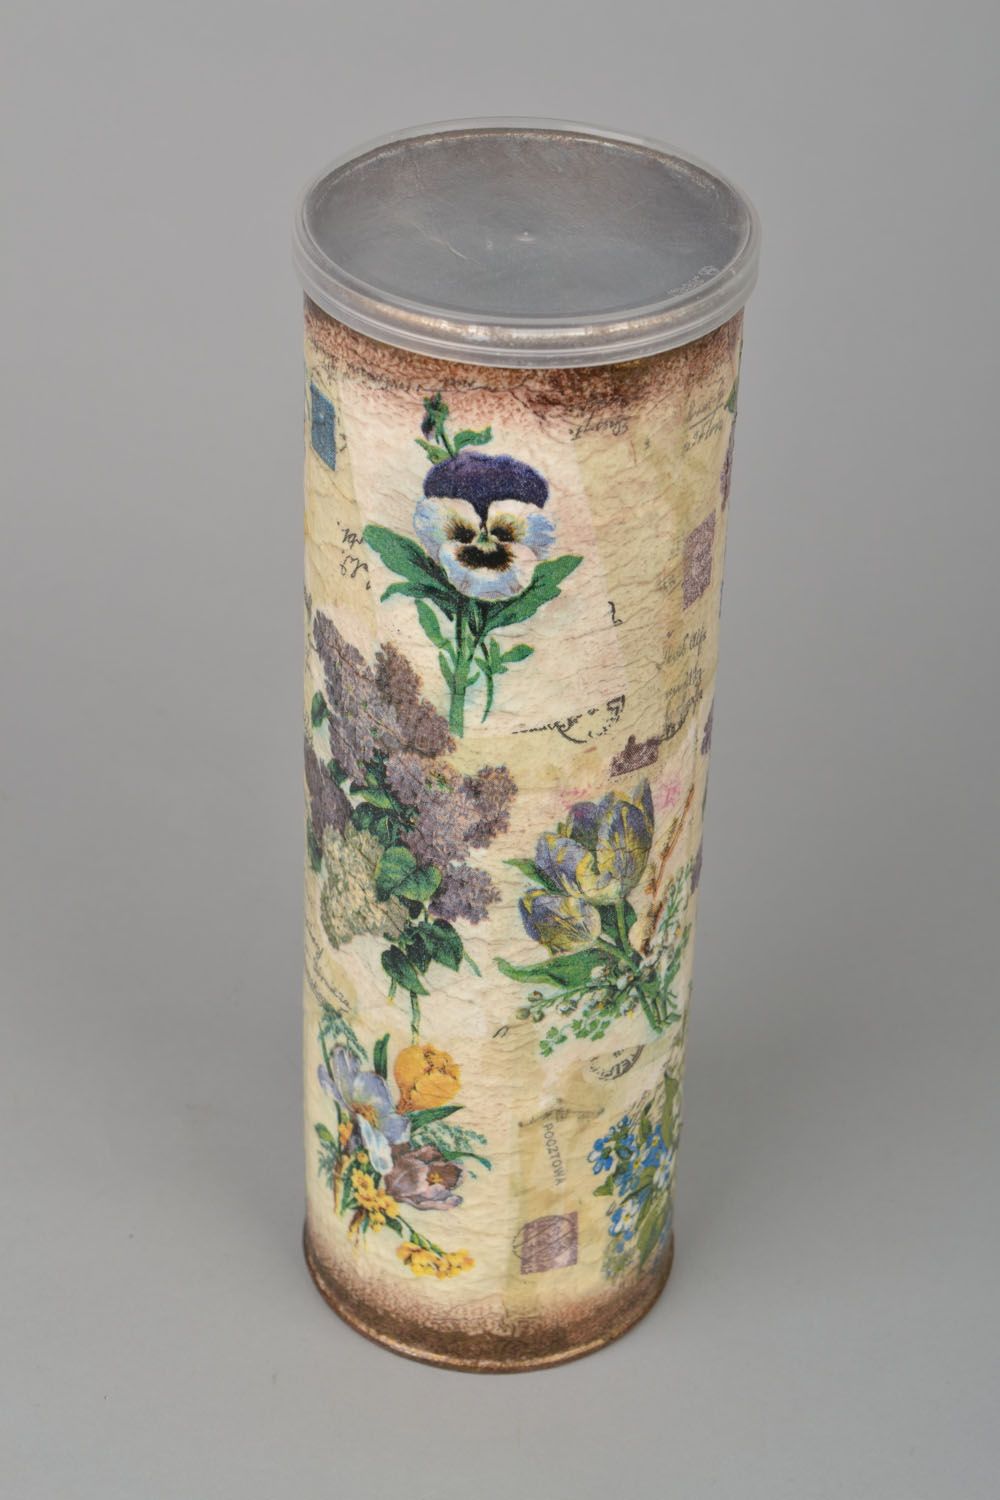 15 oz decorative handmade jar in floral design with lid 0,15 lb photo 4